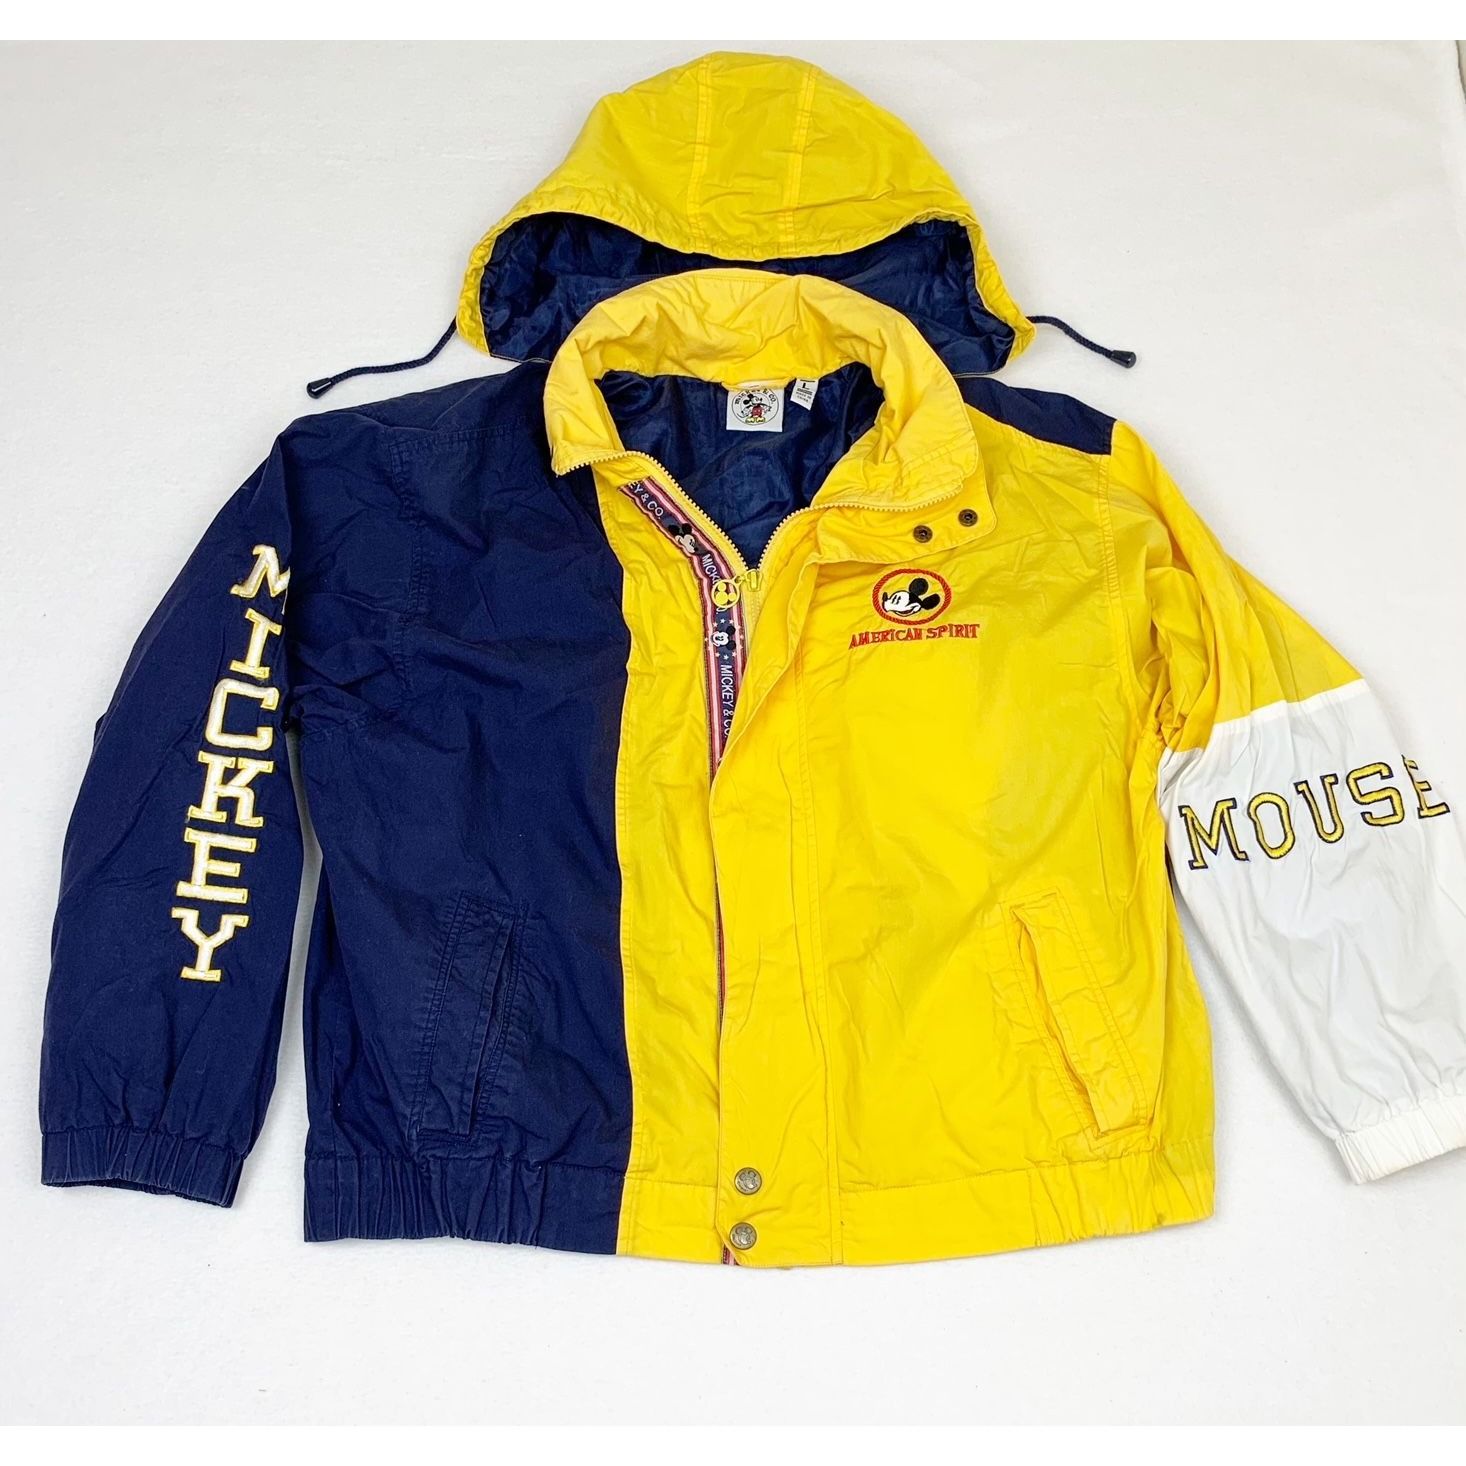 Vintage Vintage Mickey Co Jacket Large Blue Yellow Disney American Size US L / EU 52-54 / 3 - 2 Preview